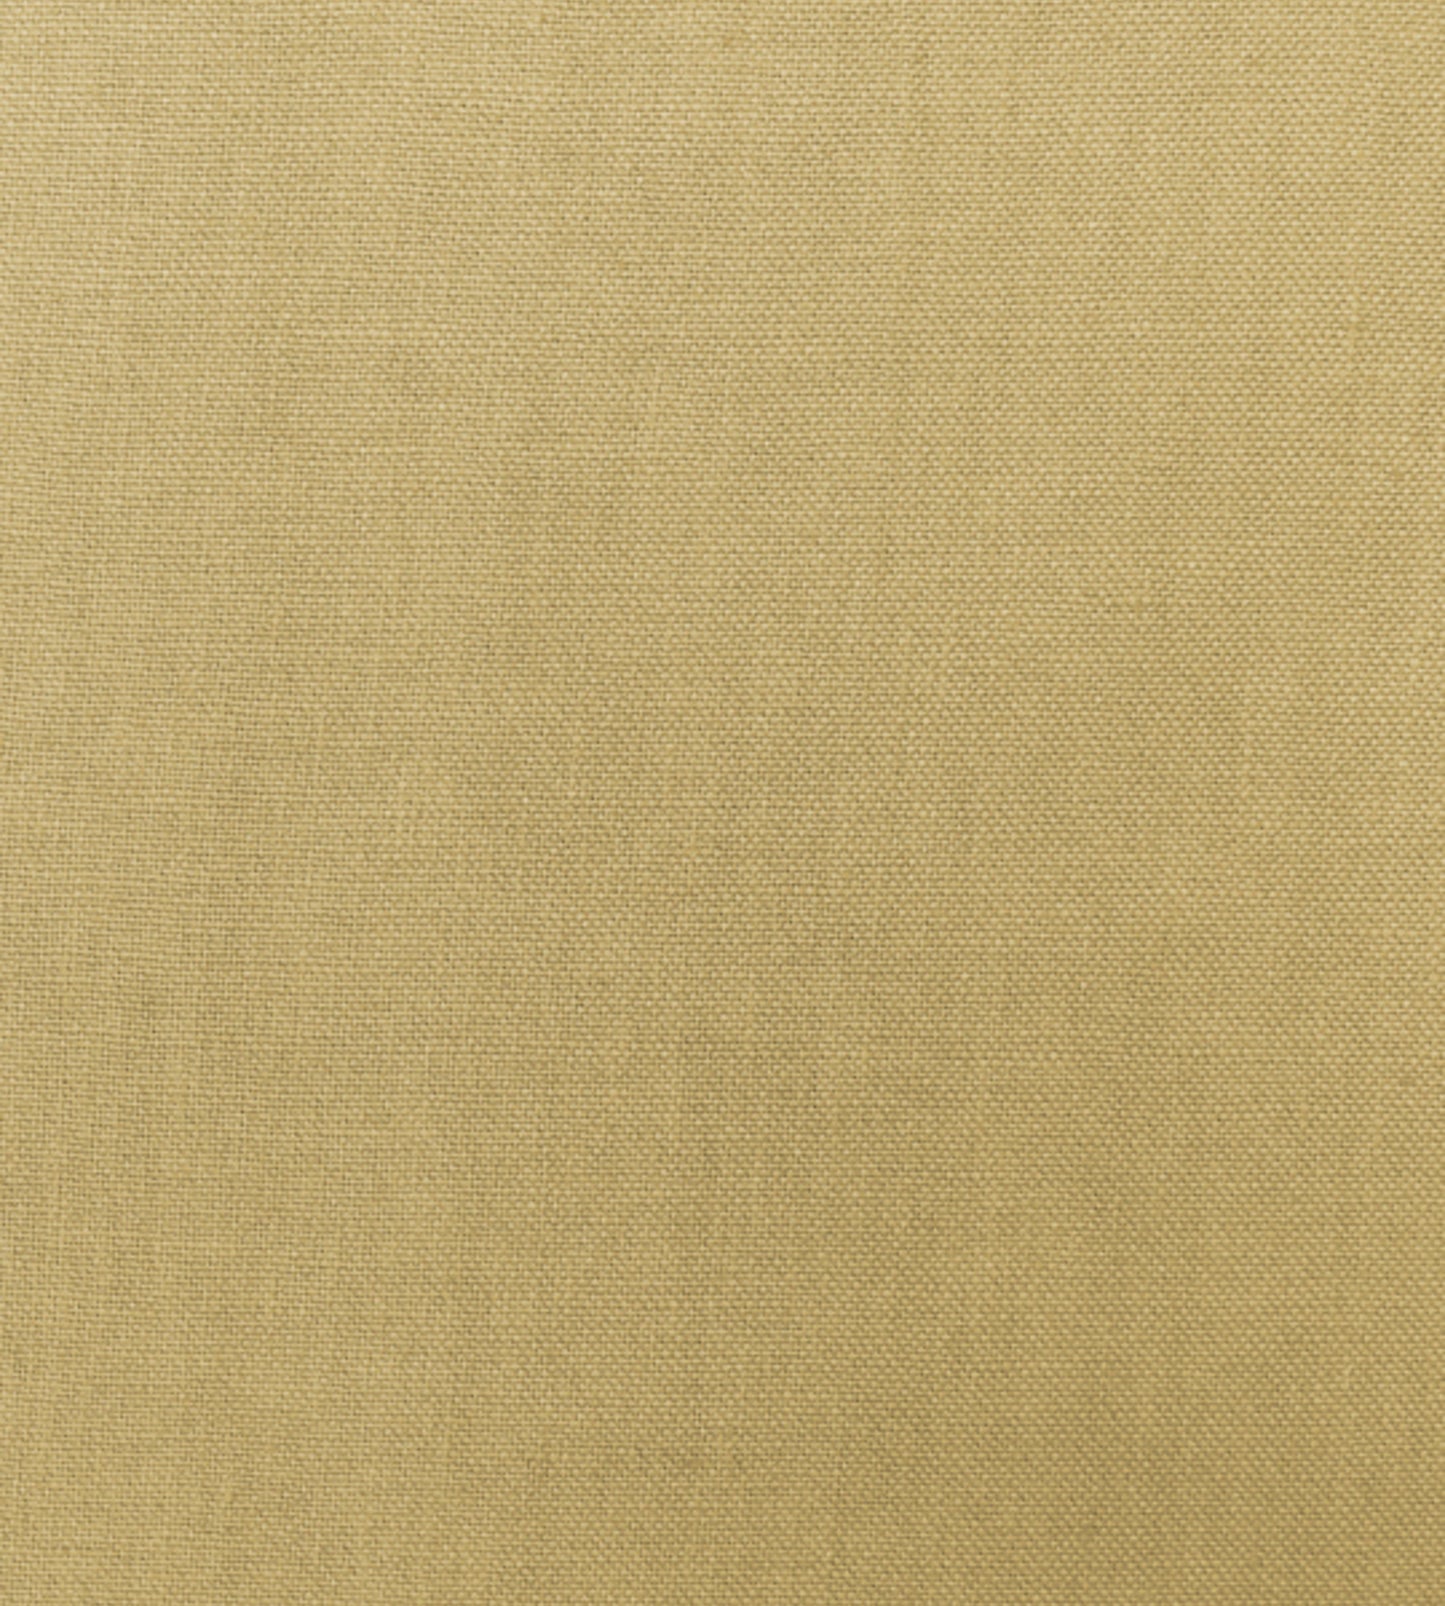 Purchase Scalamandre Fabric Pattern# SC 000727108, Toscana Linen Sahara 1